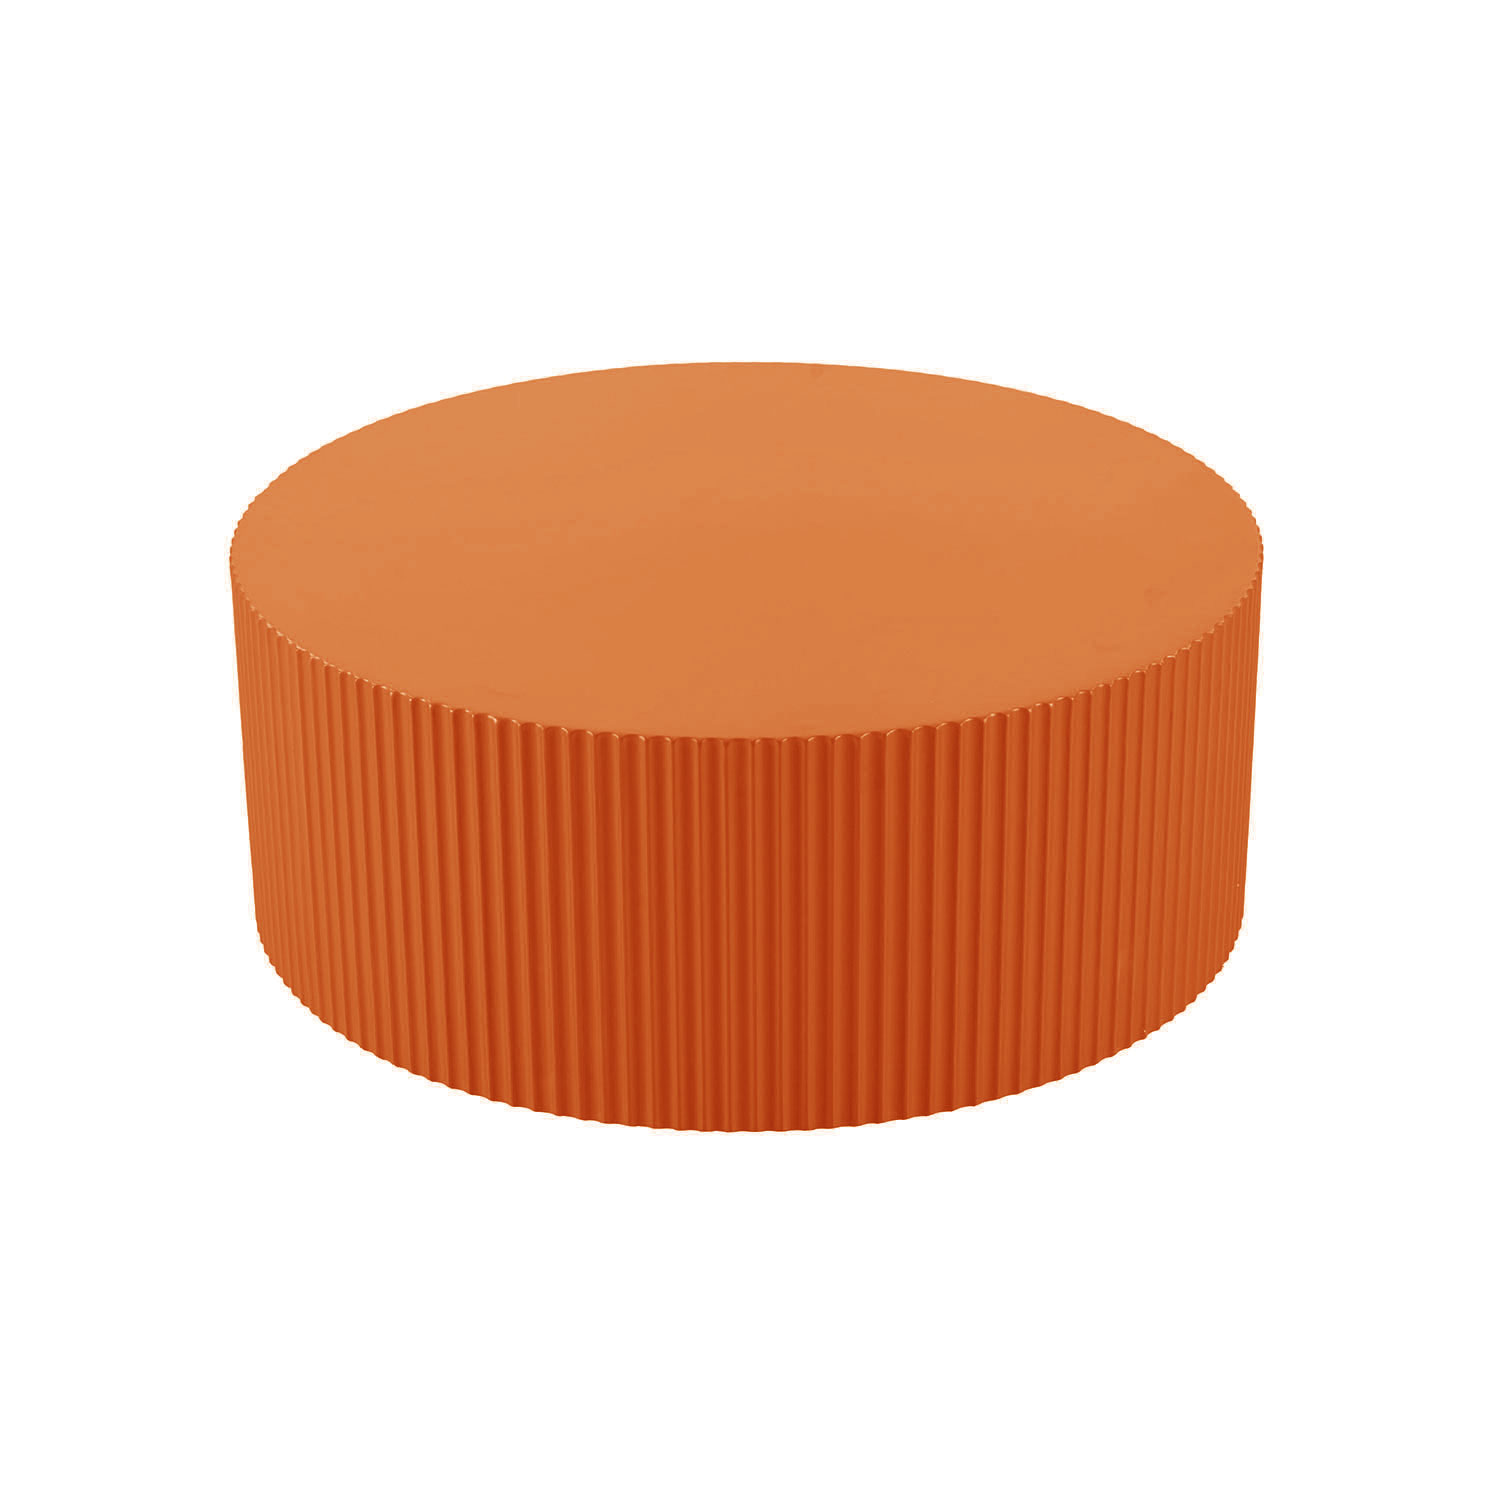 Stylish Round MDF Coffee Table with Handcraft Relief Design φ35.43inch, Bright Orange